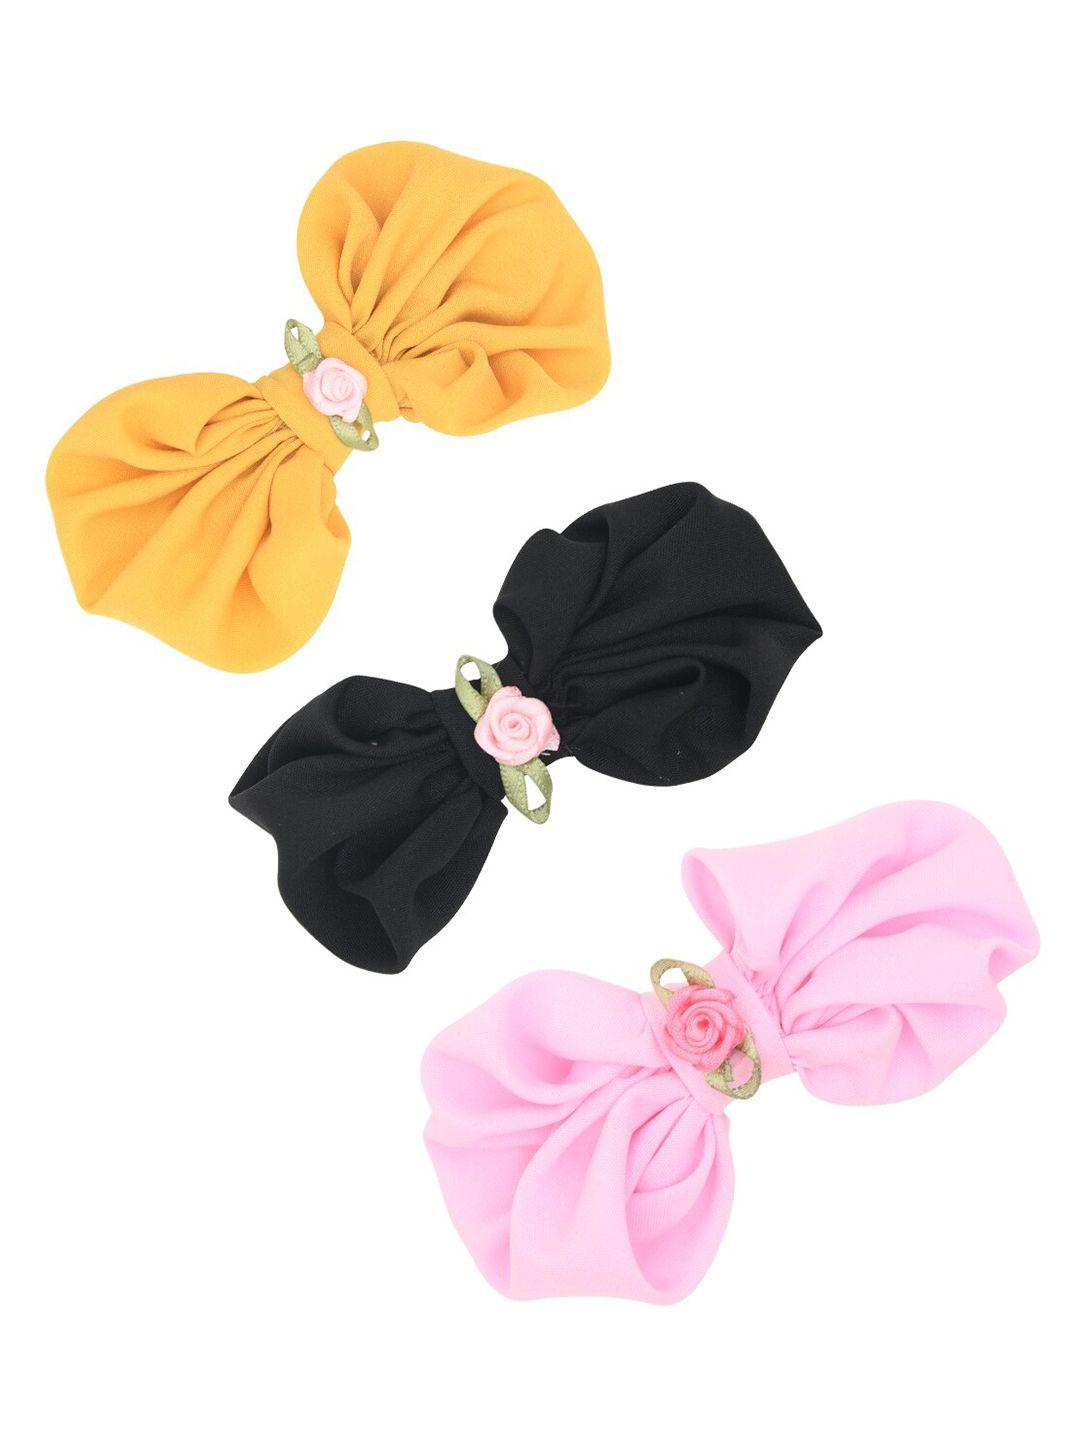 funkrafts girls black & yellow set of 3 hair accessory set